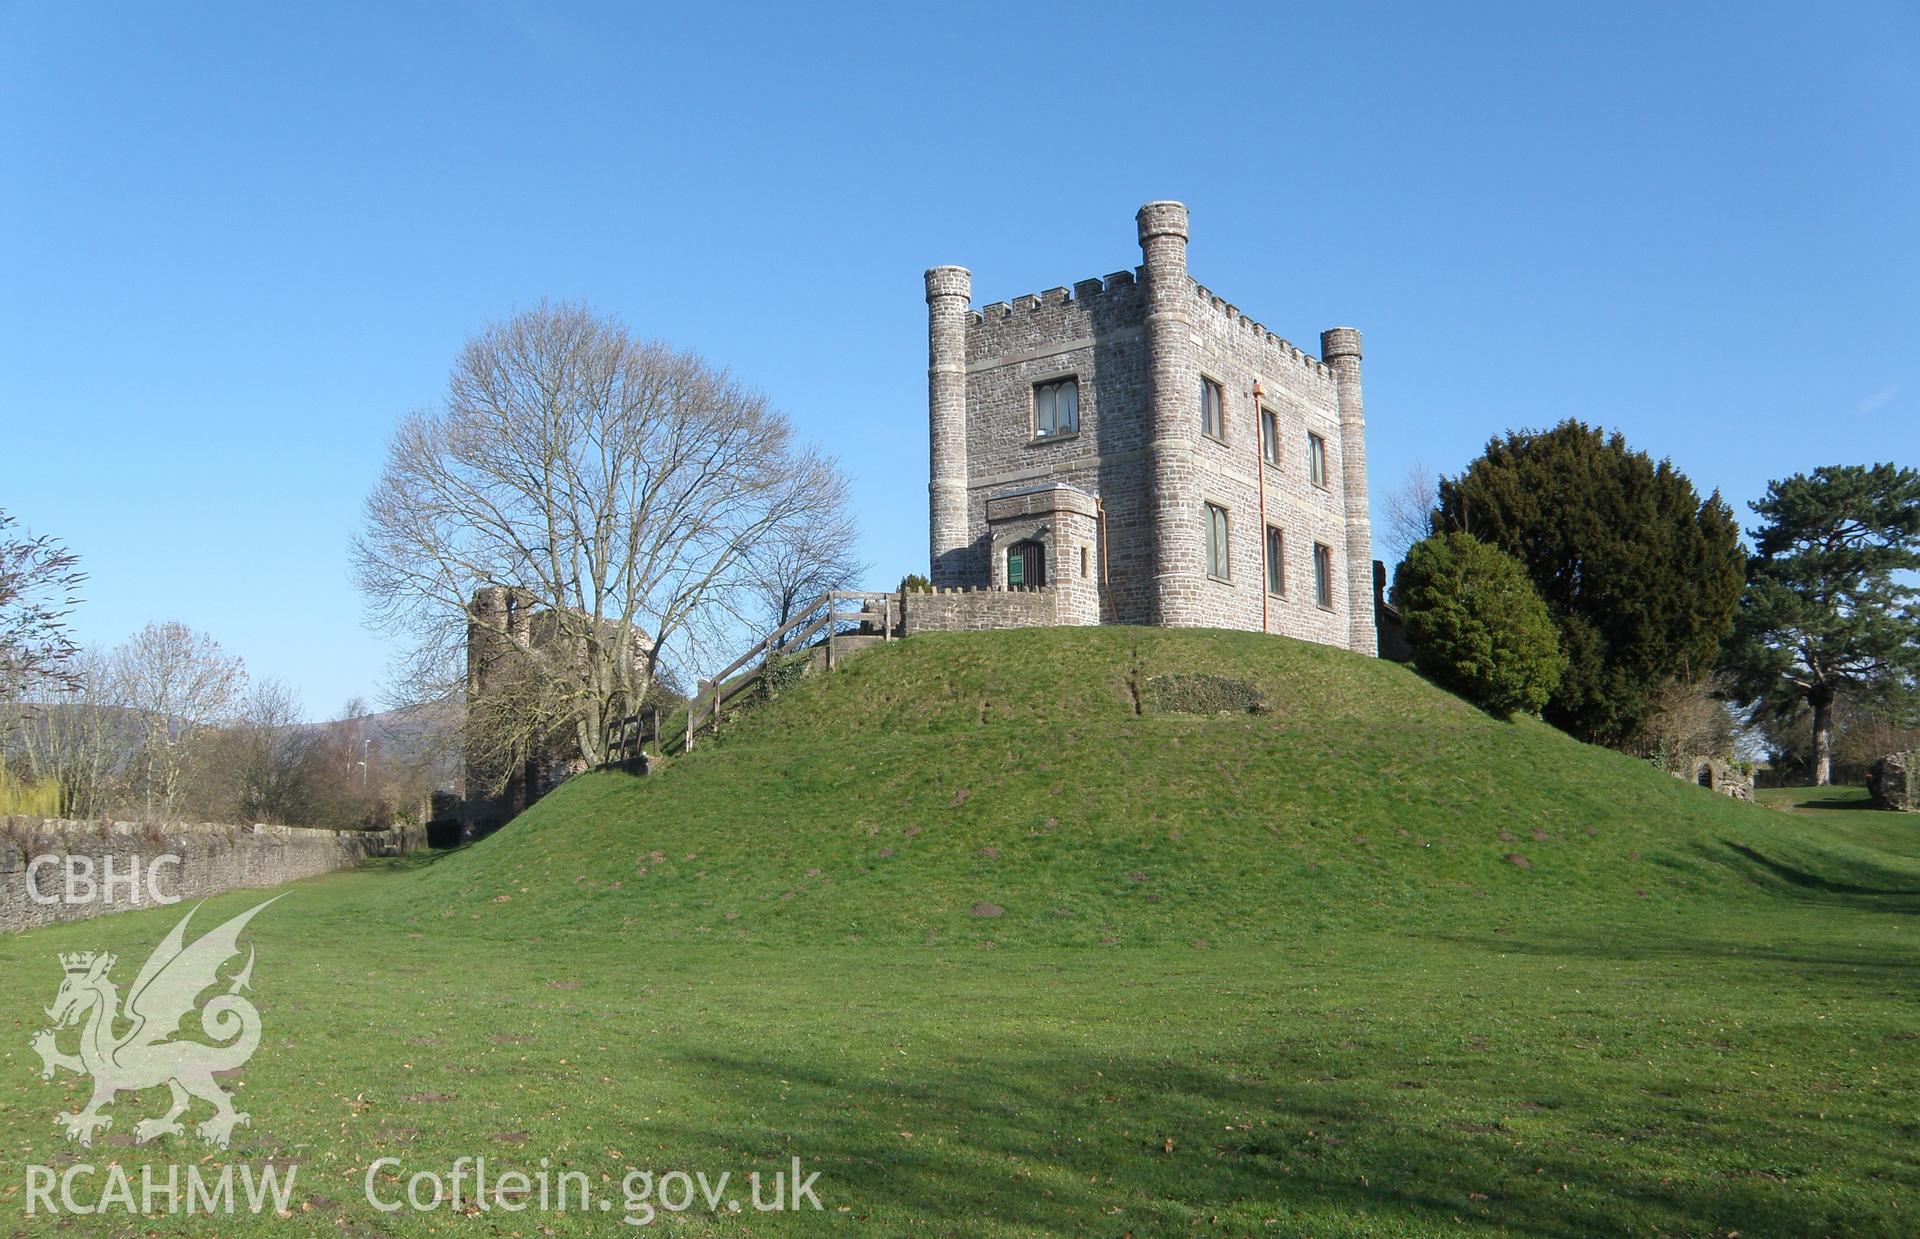 Colour photo of Abergavenny Castle, taken by Paul R. Davis, 19th March 2011.